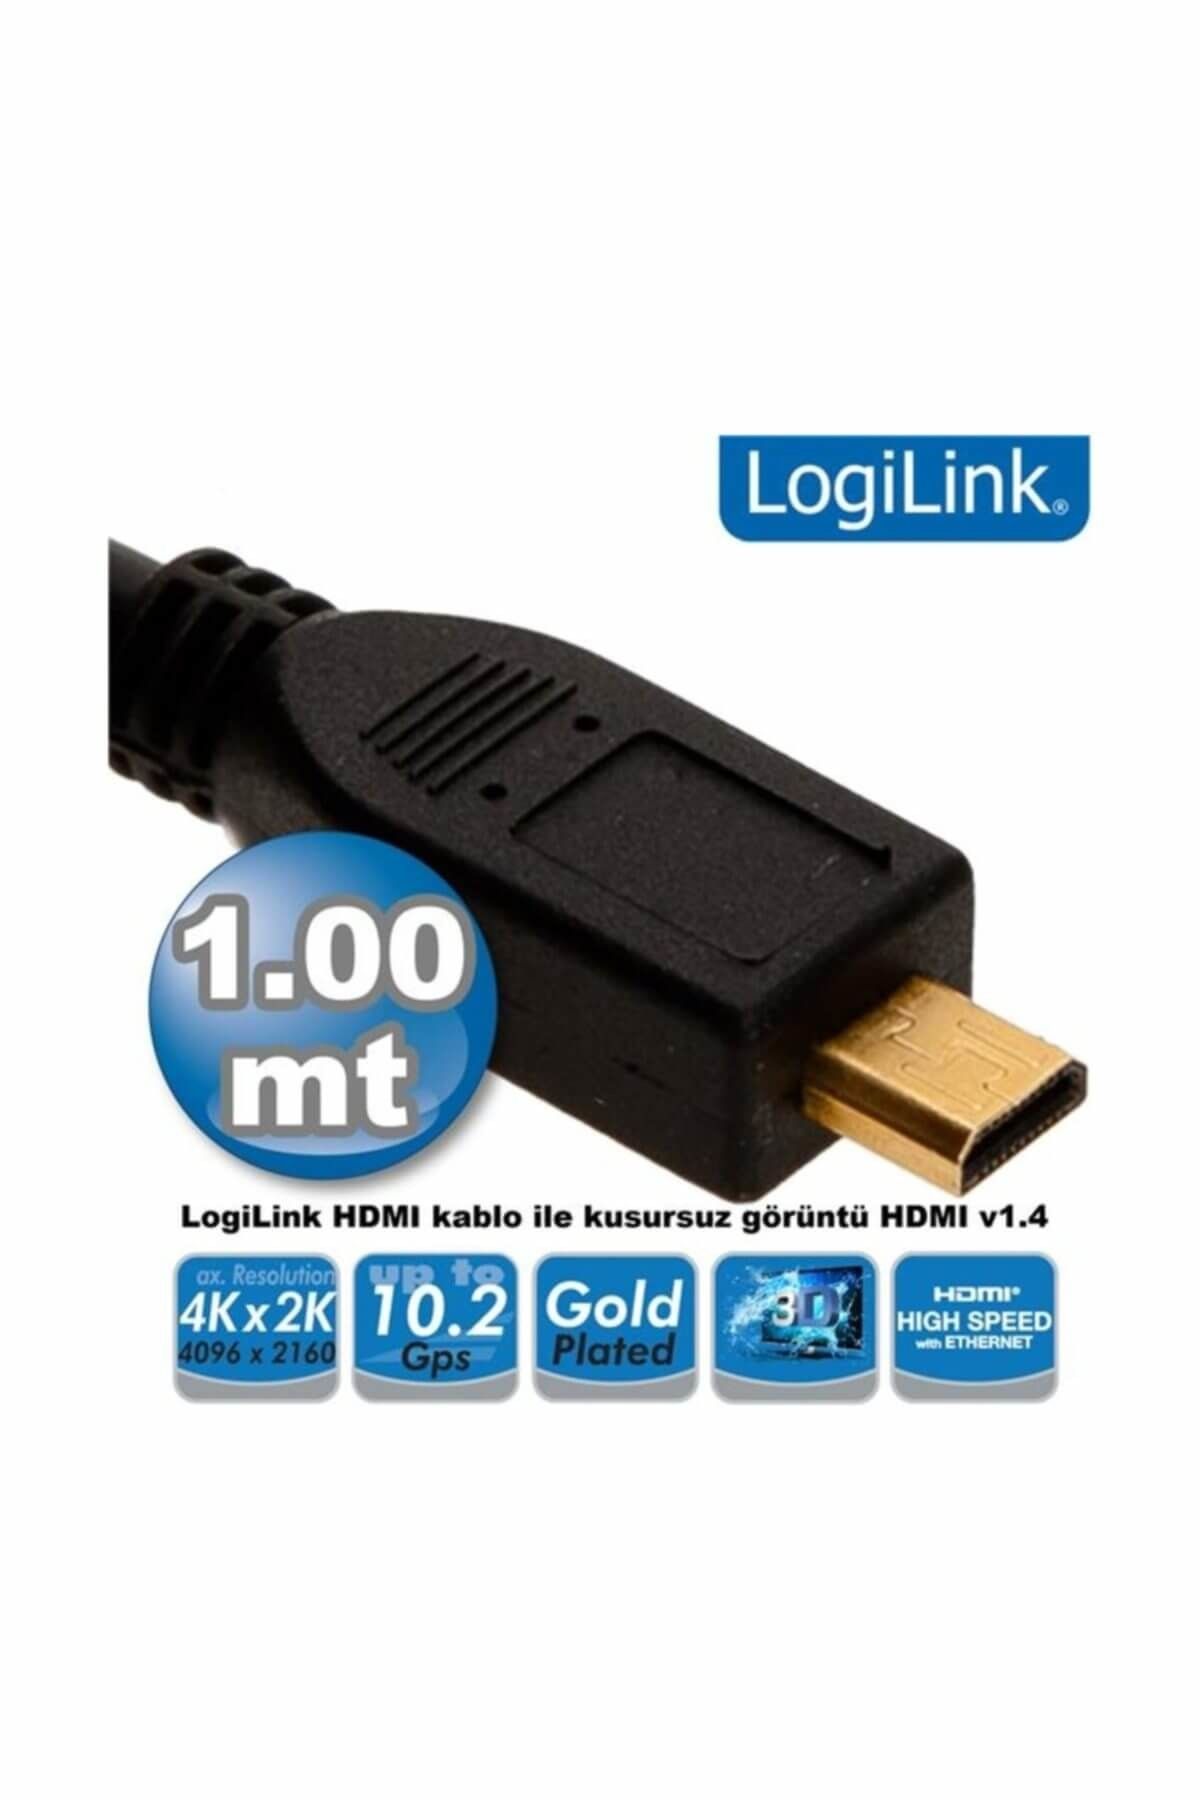 LogiLink CH0030 HDMI to Micro HDMI Kablo V1.4, 1.0m